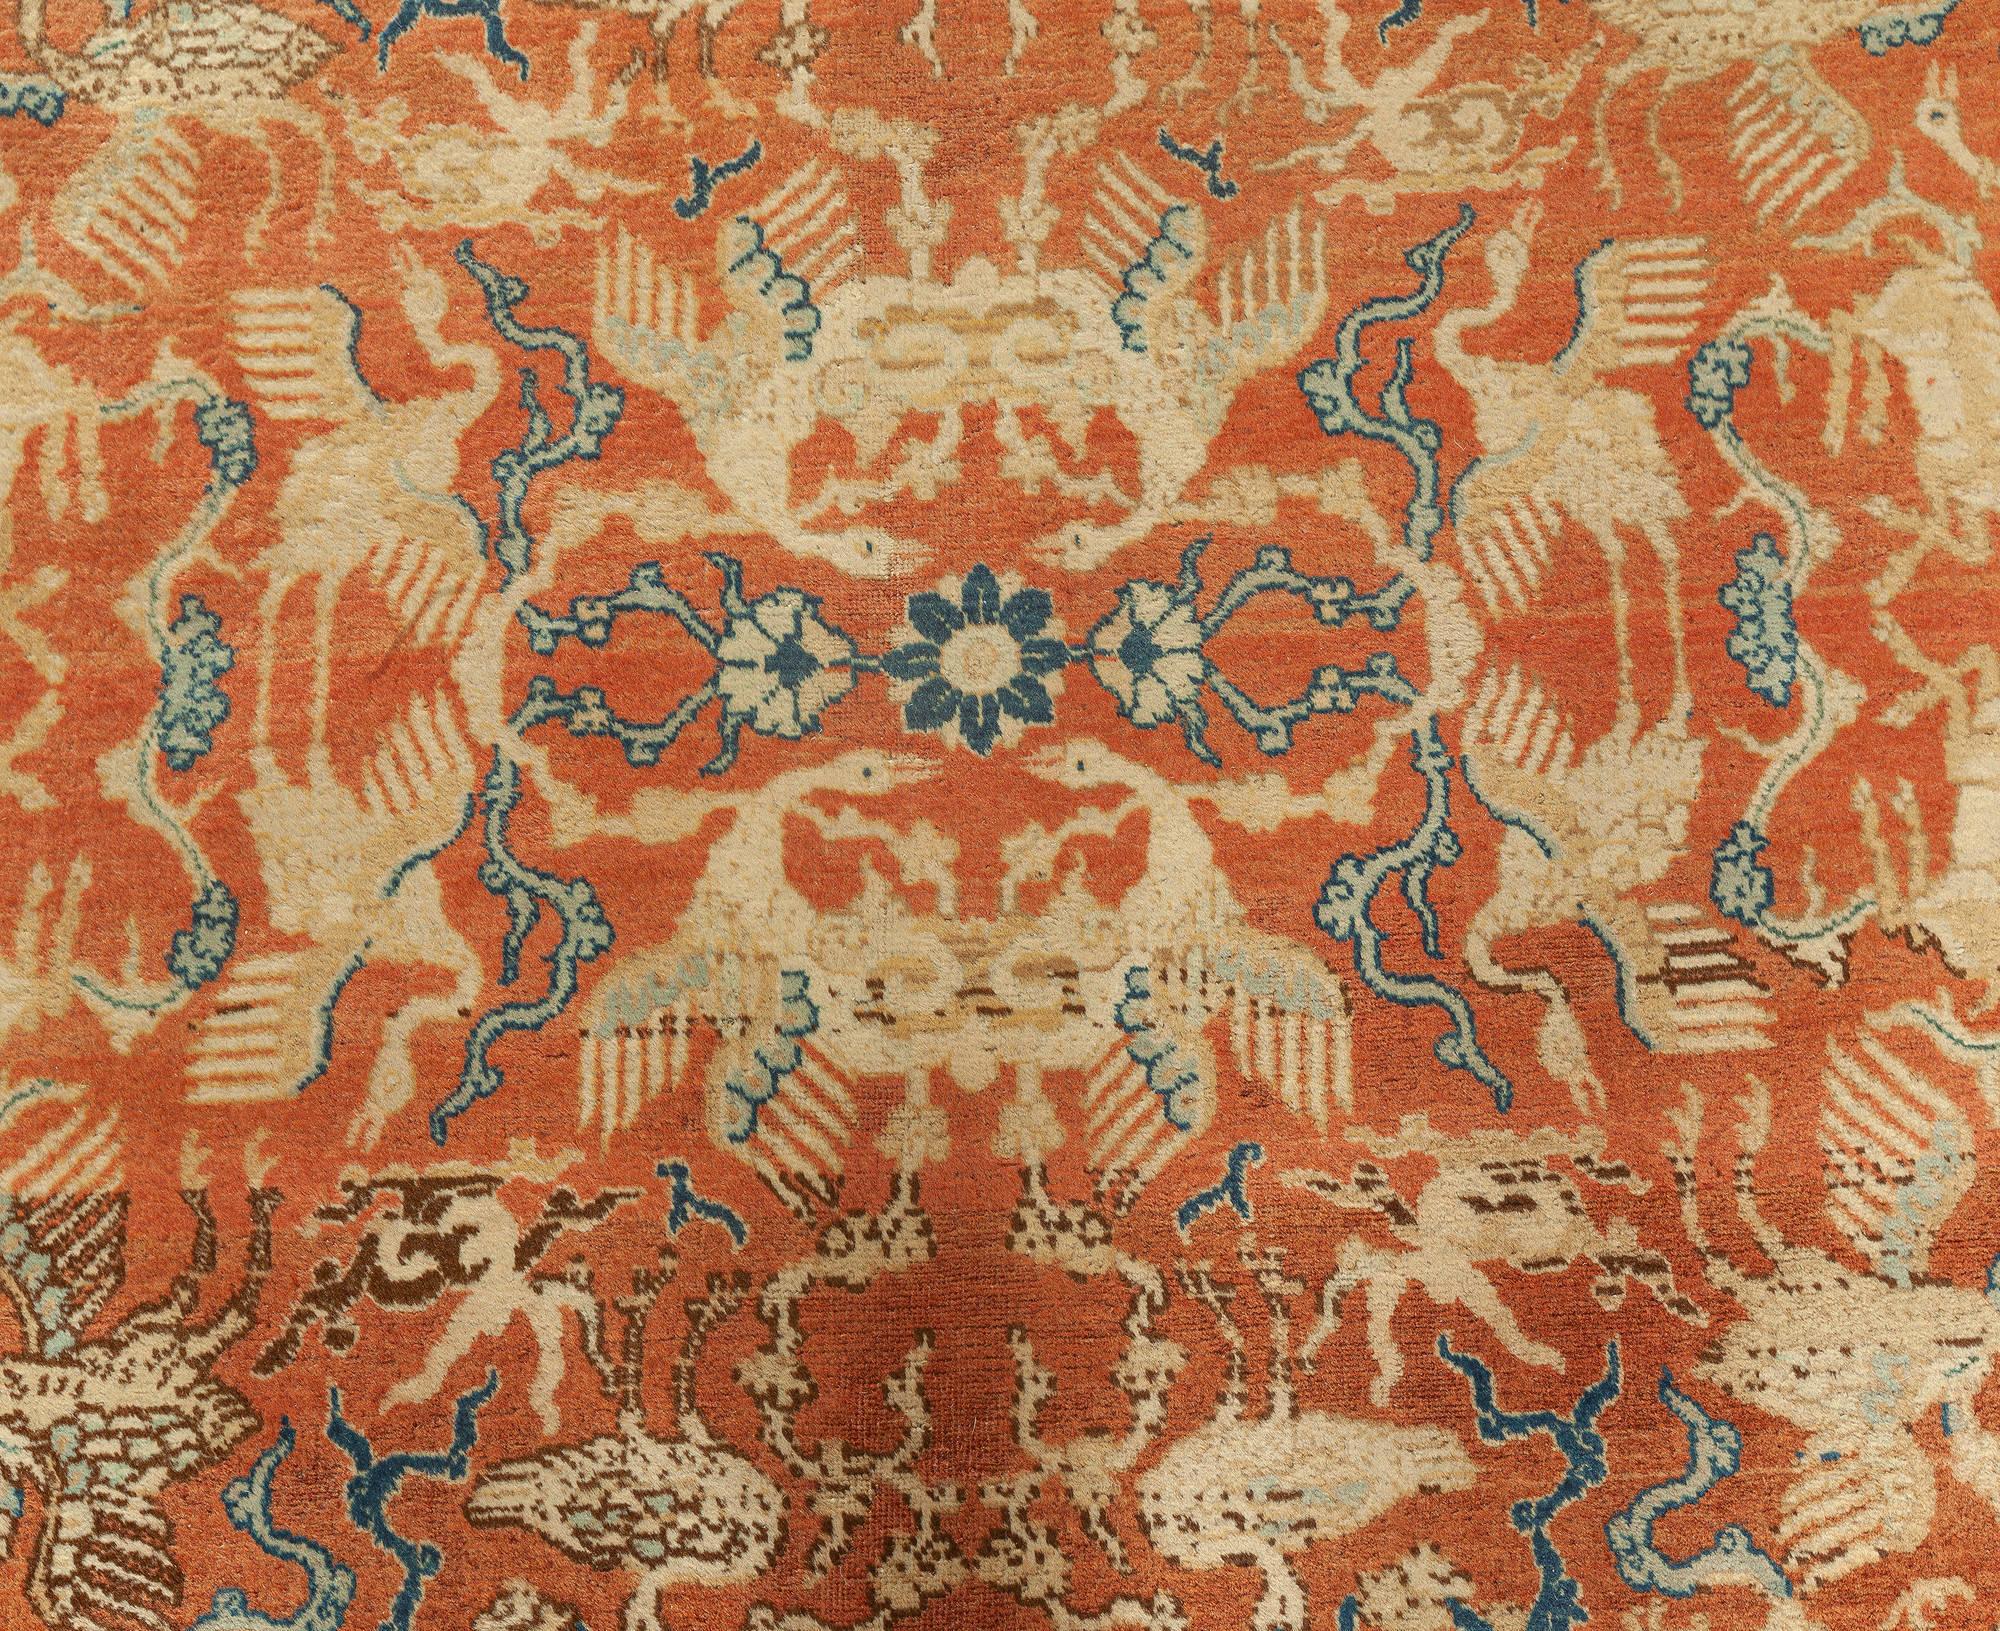 Authentic Persian Tabriz handwoven wool carpet
Size: 11'3